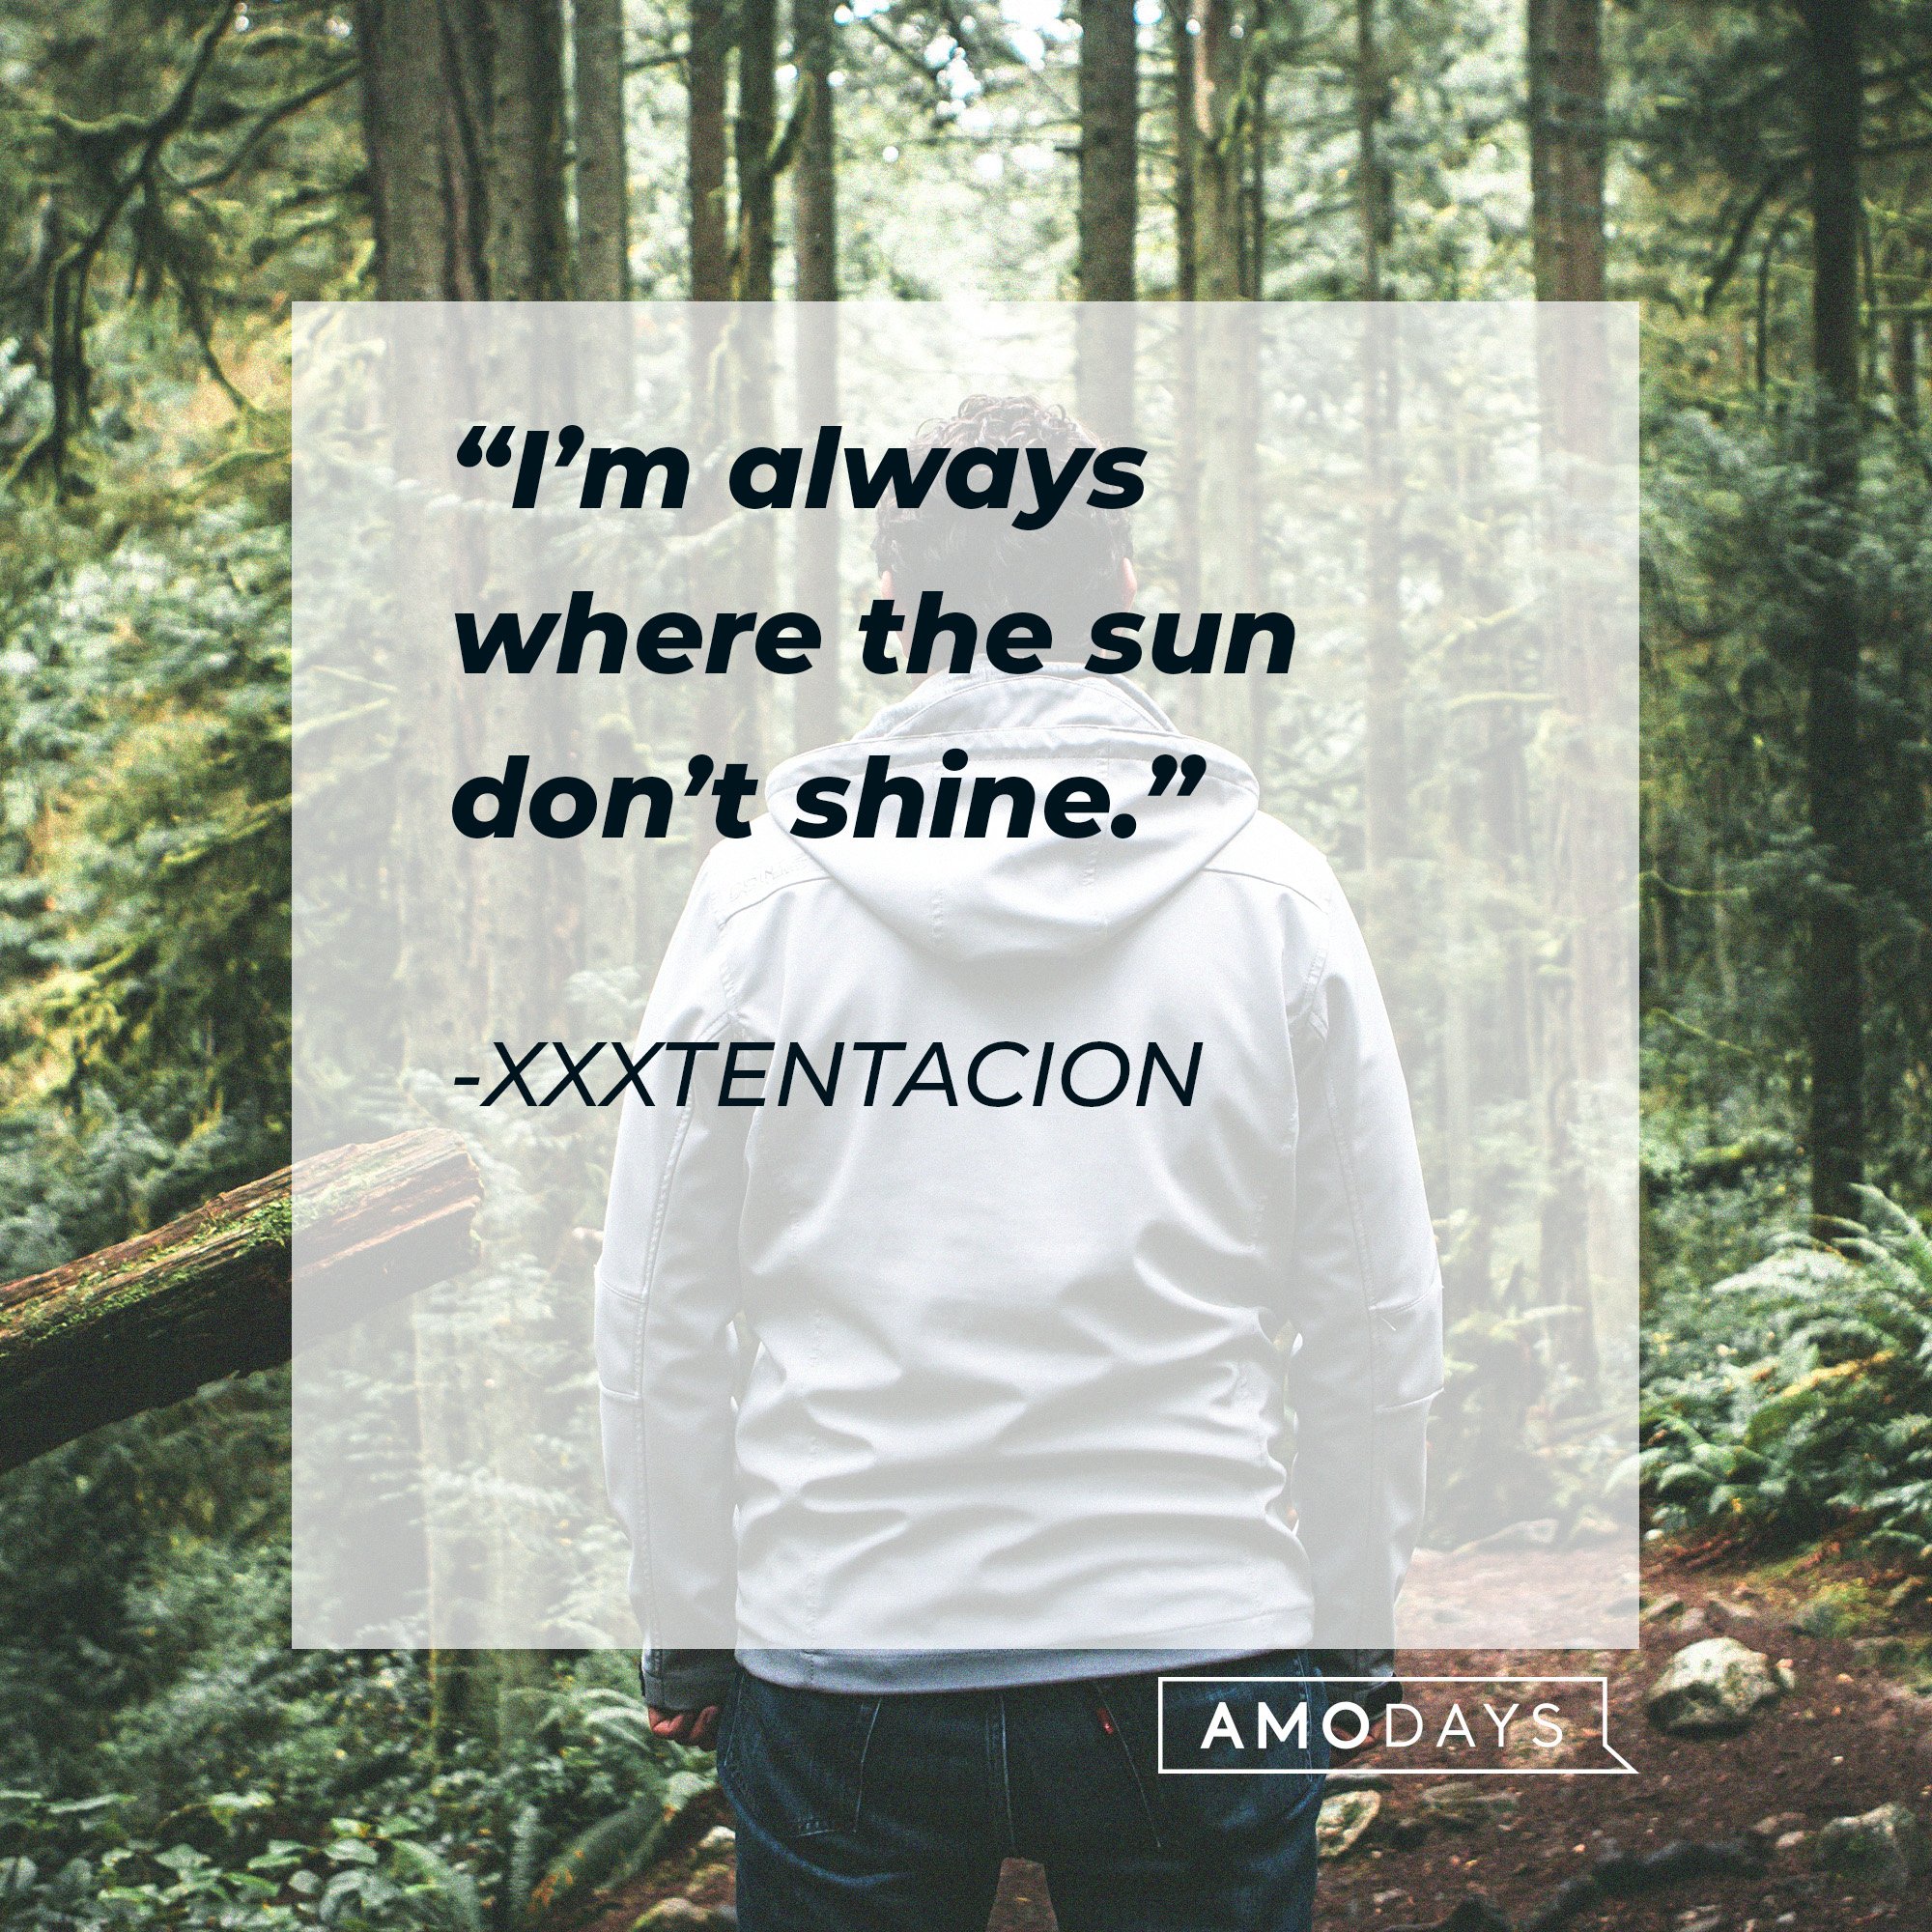 Xxxtentacion’s quote: “I’m always where the sun don’t shine.” | Image: AmoDays